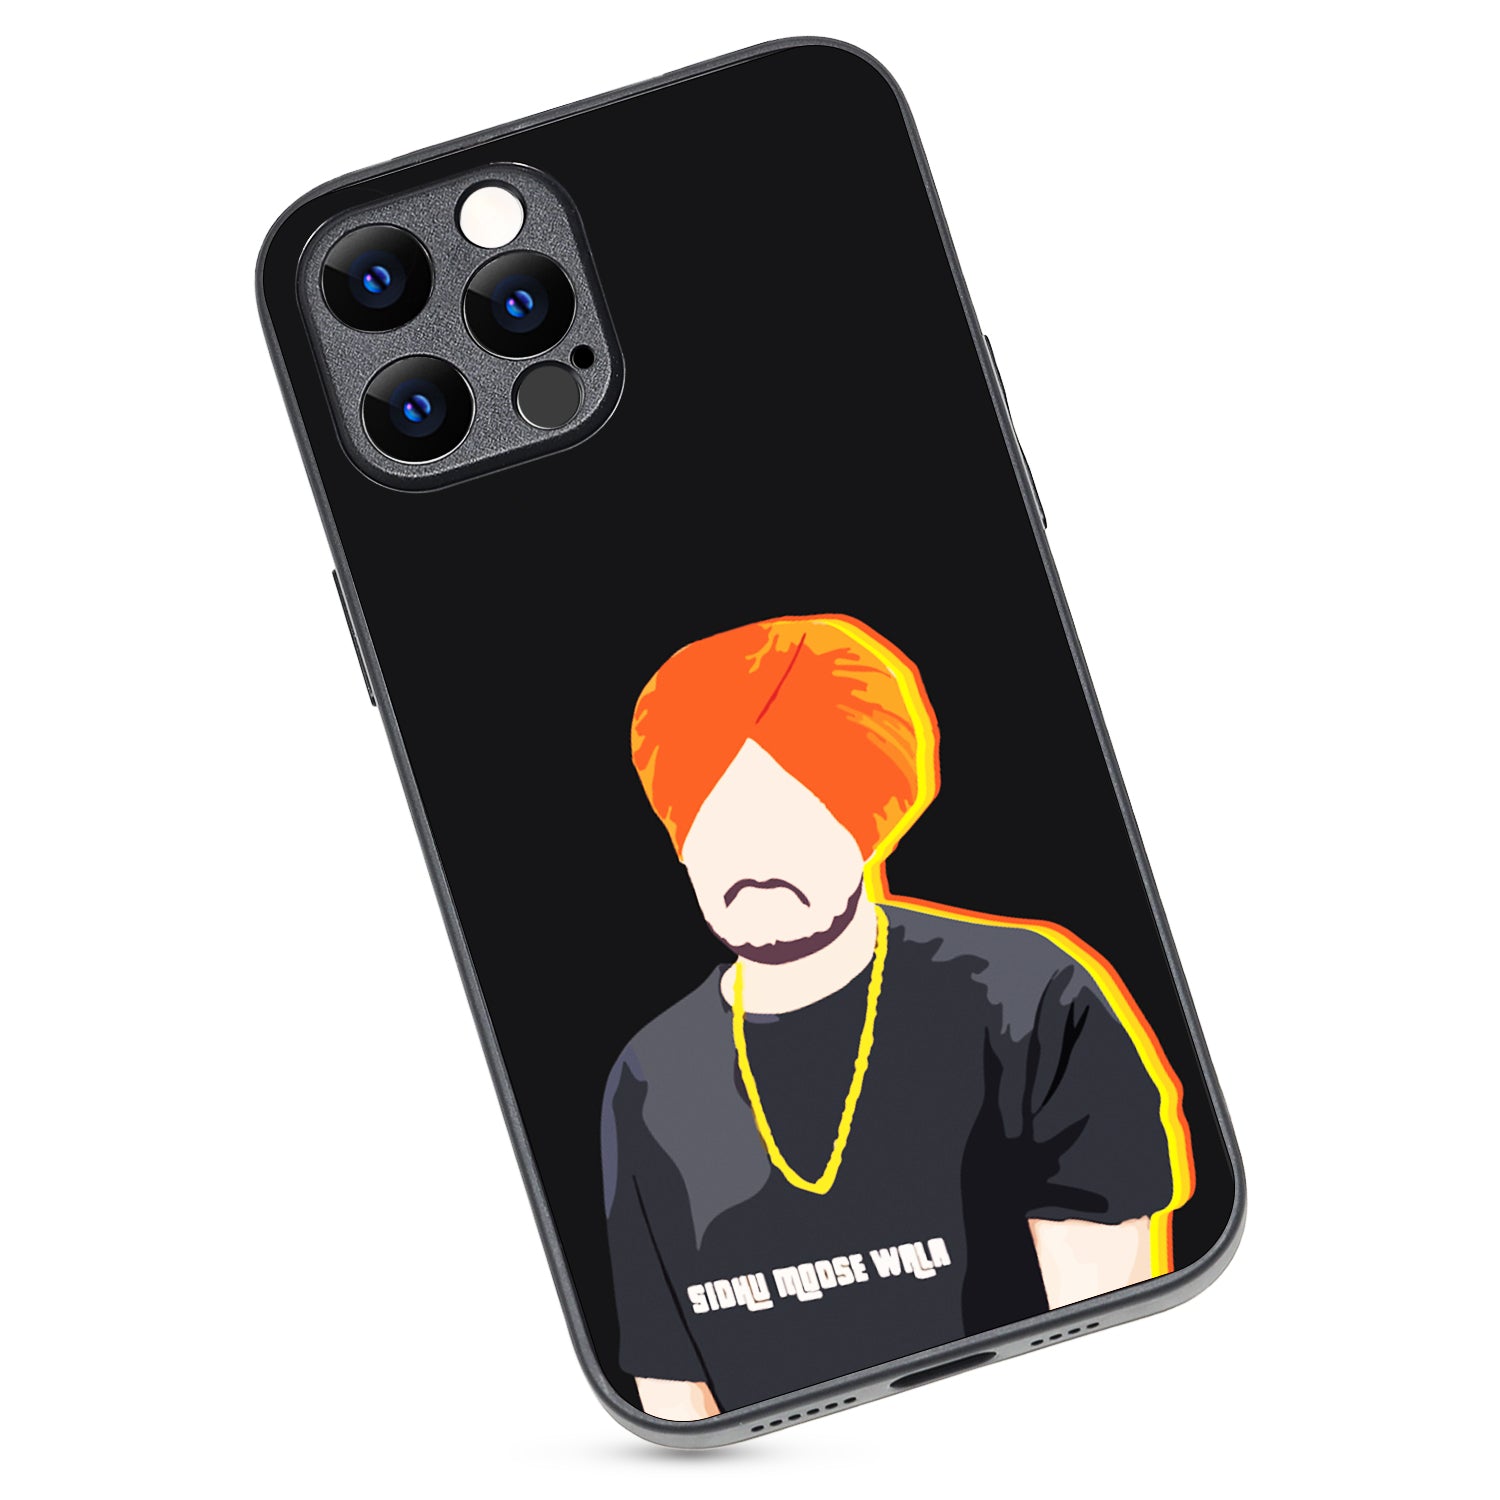 Rapper Sidhu Moosewala iPhone 12 Pro Max Case